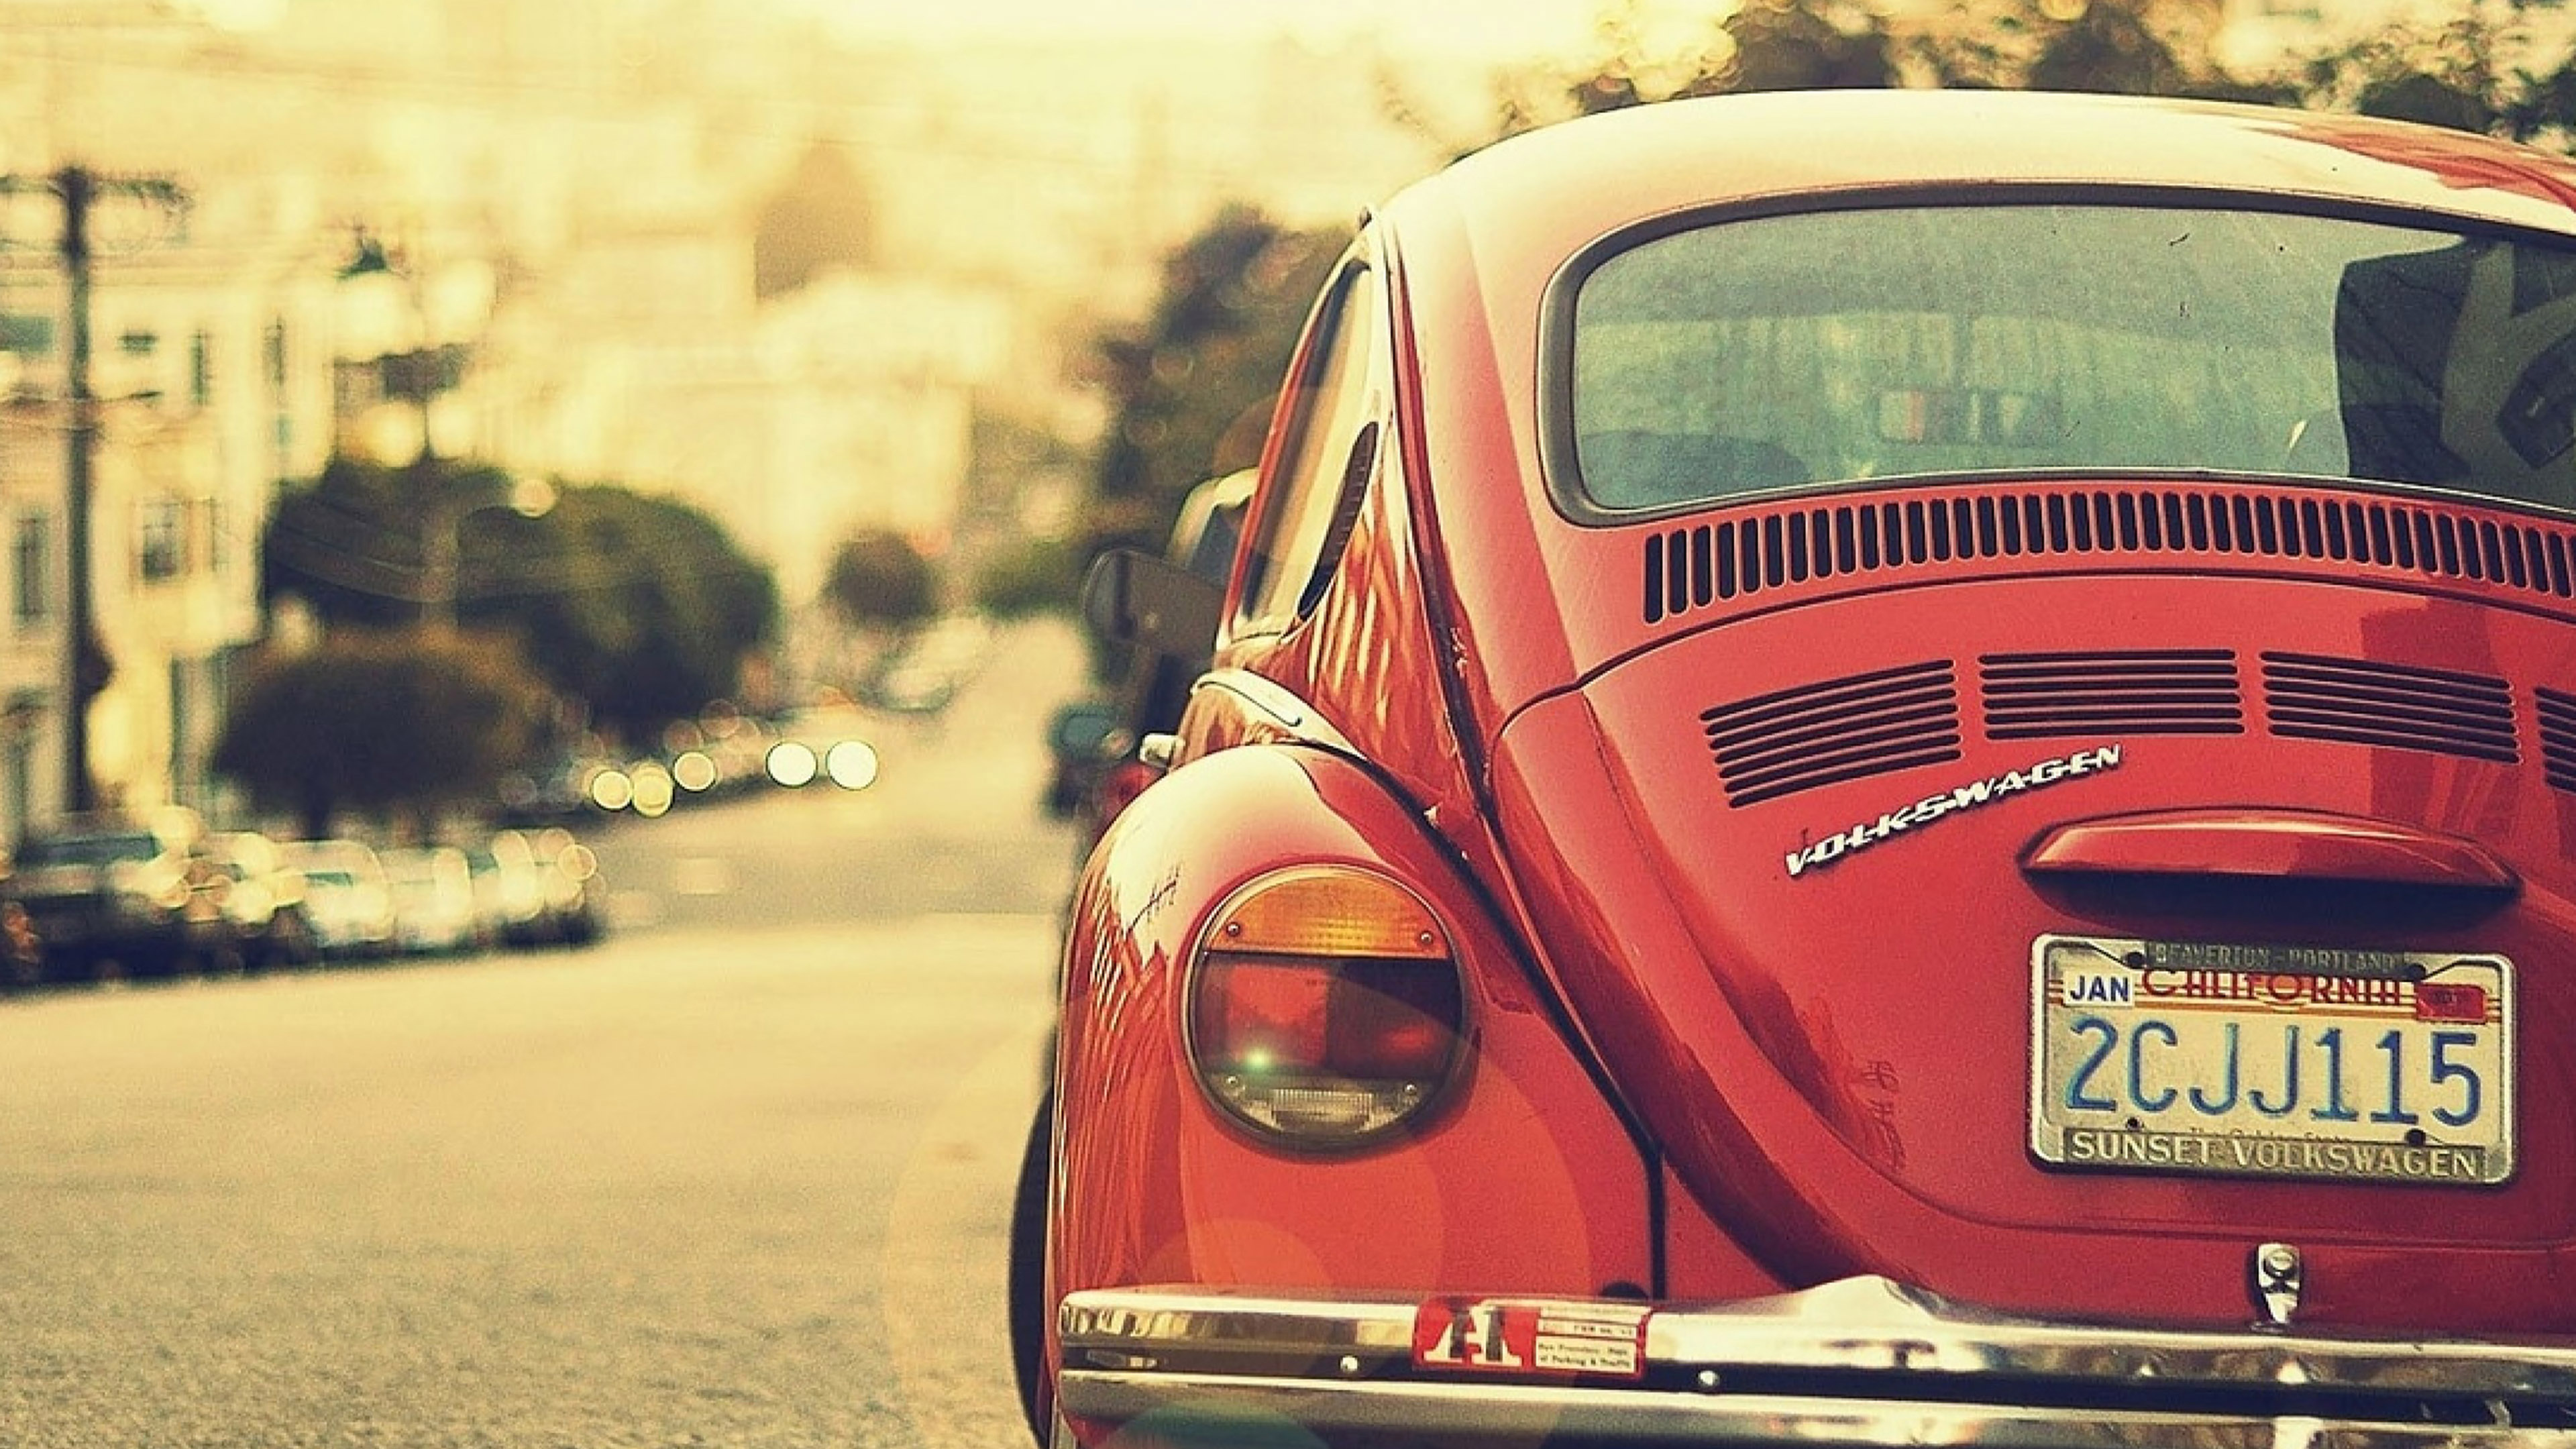 Vintage Car: Limited production numbers, Volkswagen Beetle. 3840x2160 4K Wallpaper.